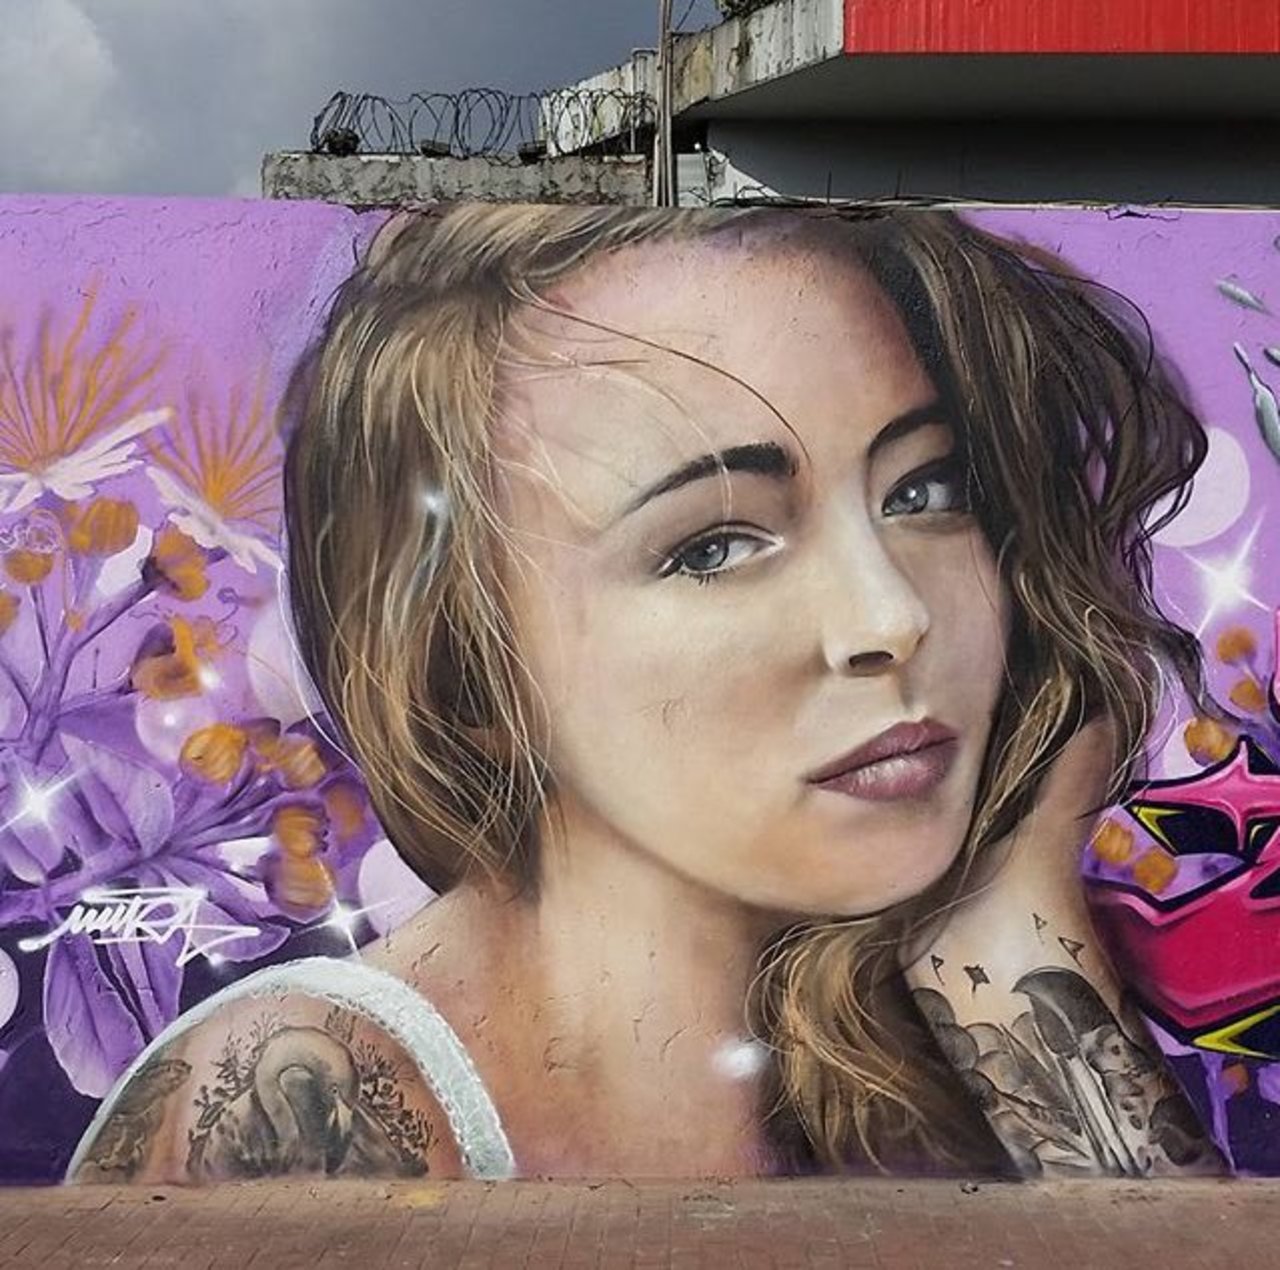 New tumblr post: "New Street Art by Mantarea 

#art #graffiti #mural #streetart https://t.co/tOlqNsEVkI" http://ift.tt/1NXBNW5 , IFTTT, …